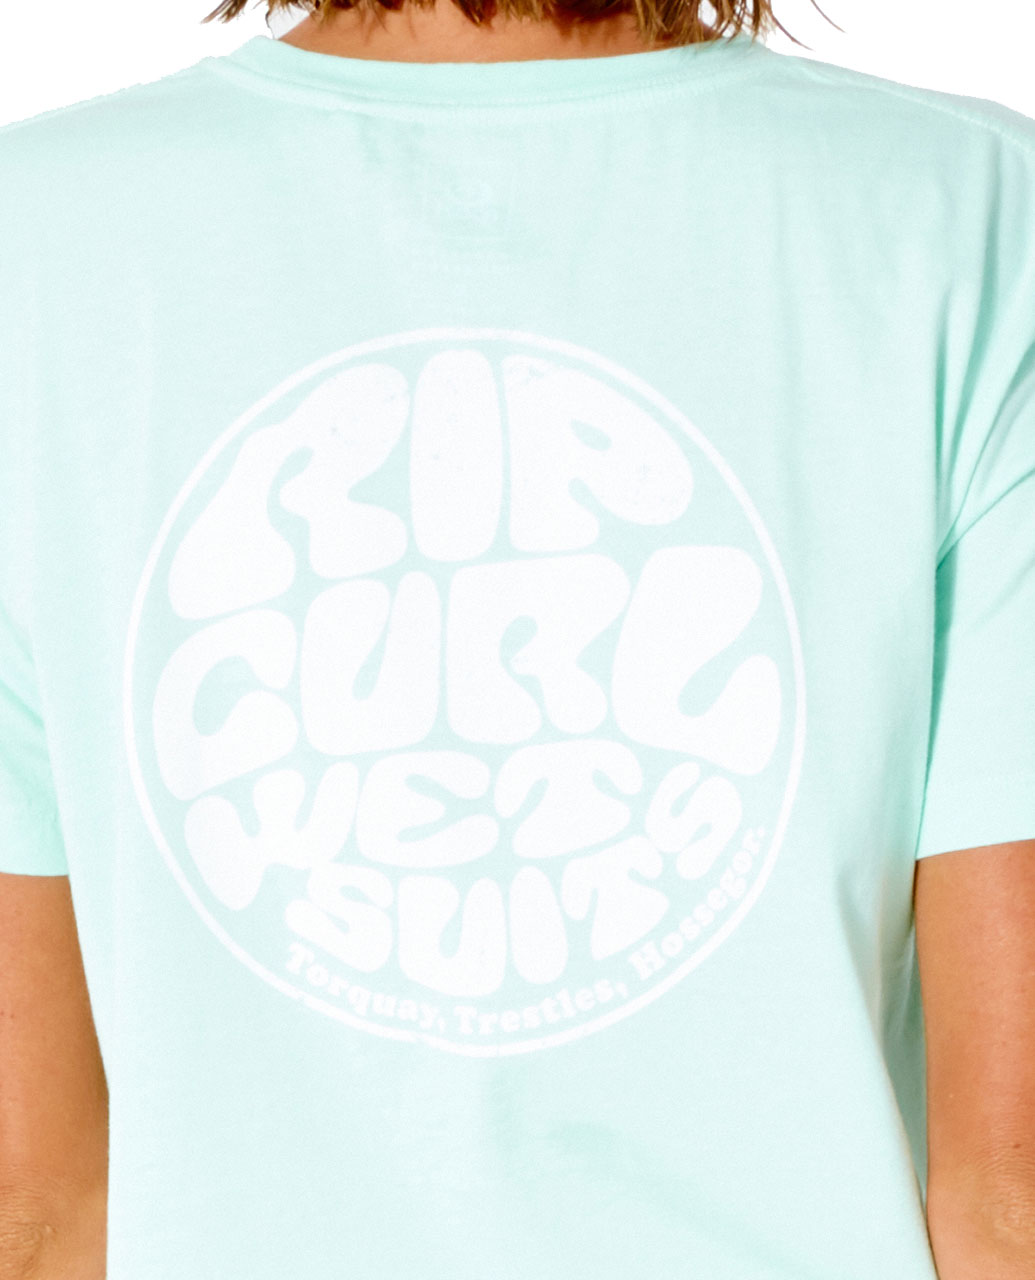 Rip curl WETTIE ICON TEE II T-Shirt light aqua | Warehouse One